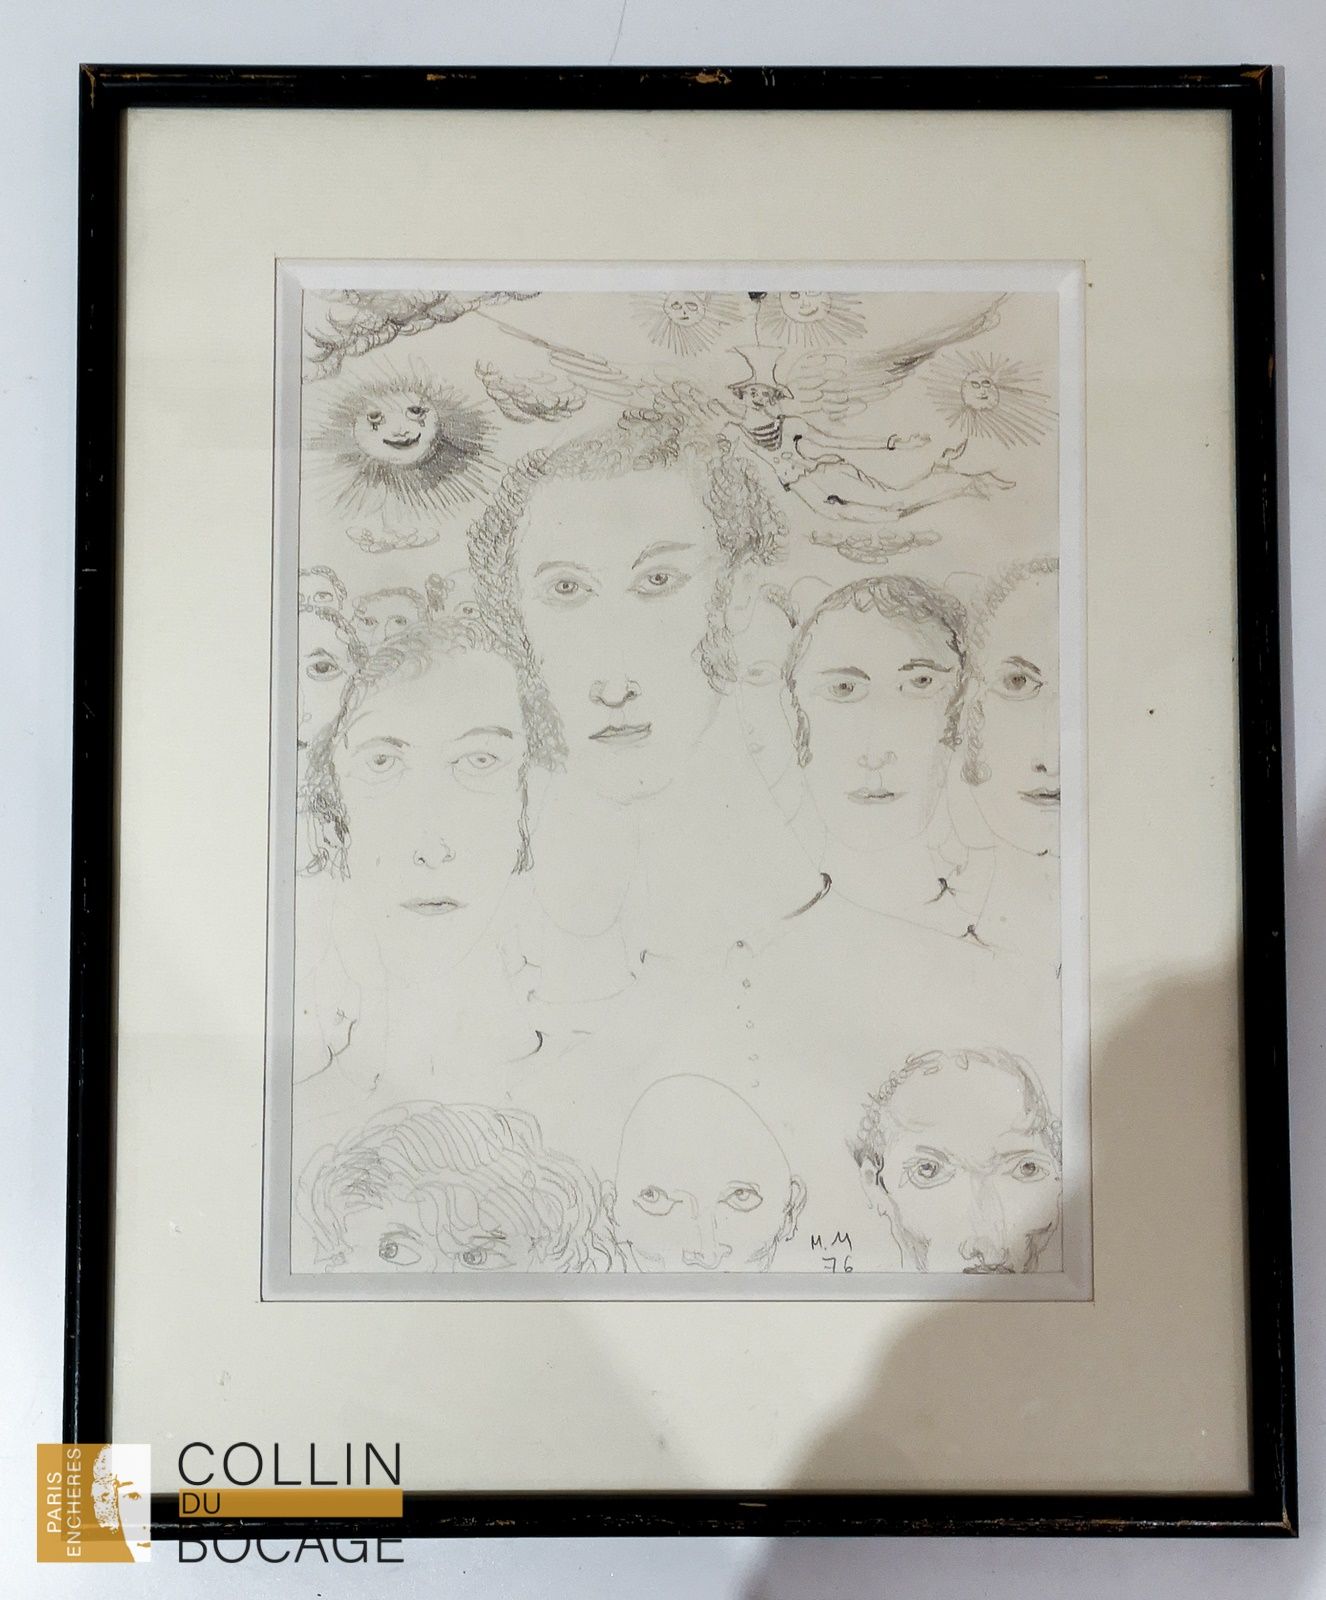 Null 马塞尔-马尔考（1923-2007 年）
多幅自画像
铅笔画，右下方有单字，年代 76
证明：他的遗产拍卖